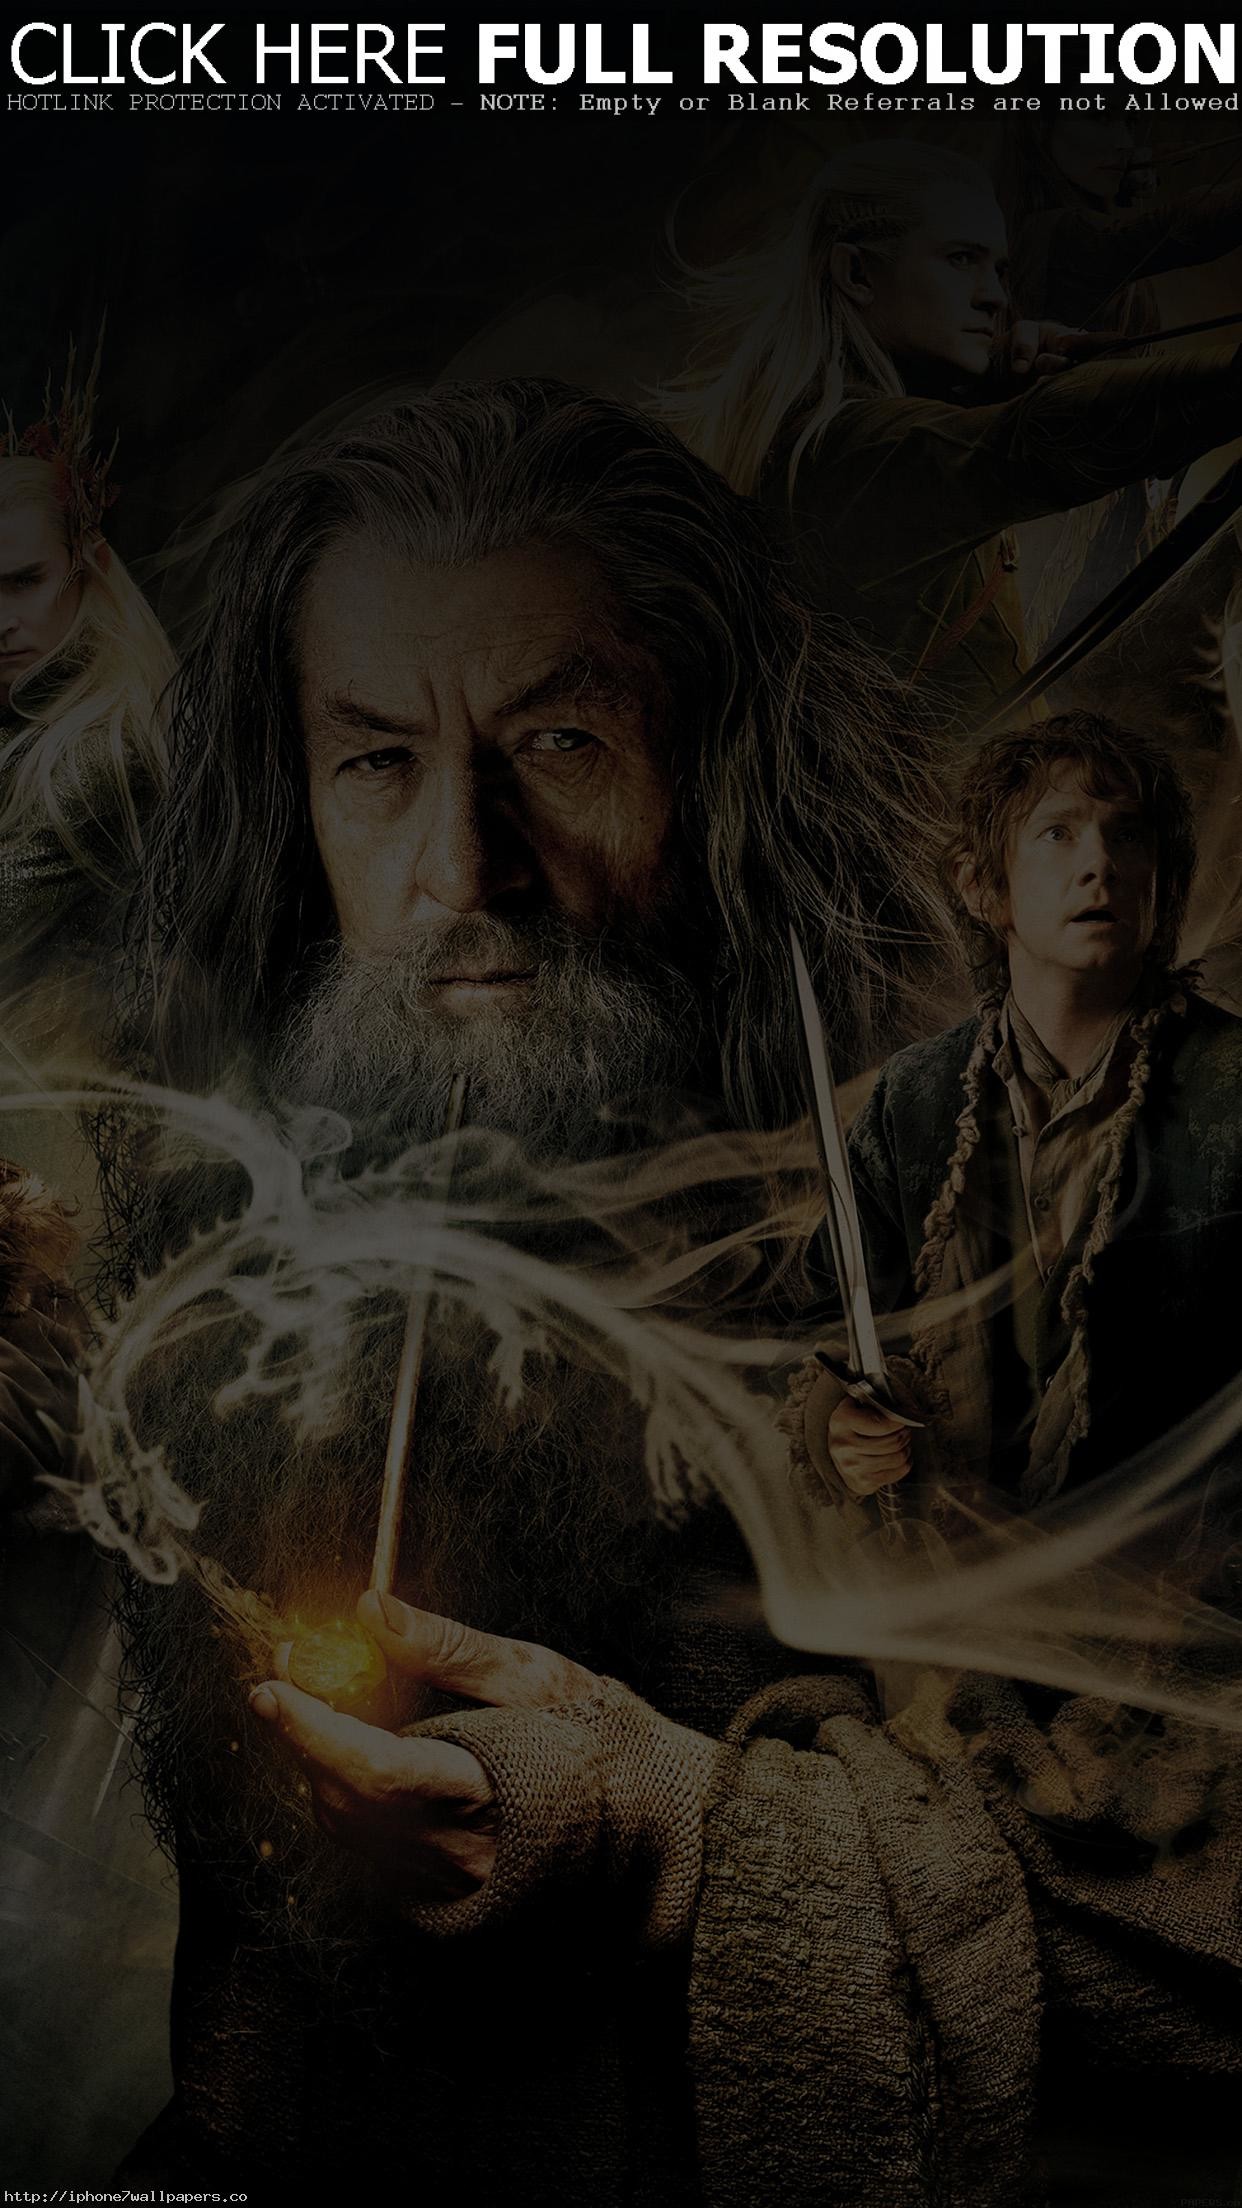 Wallpaper Desolation Of Smaug Hobbit Film Face Android wallpaper – Android HD wallpapers